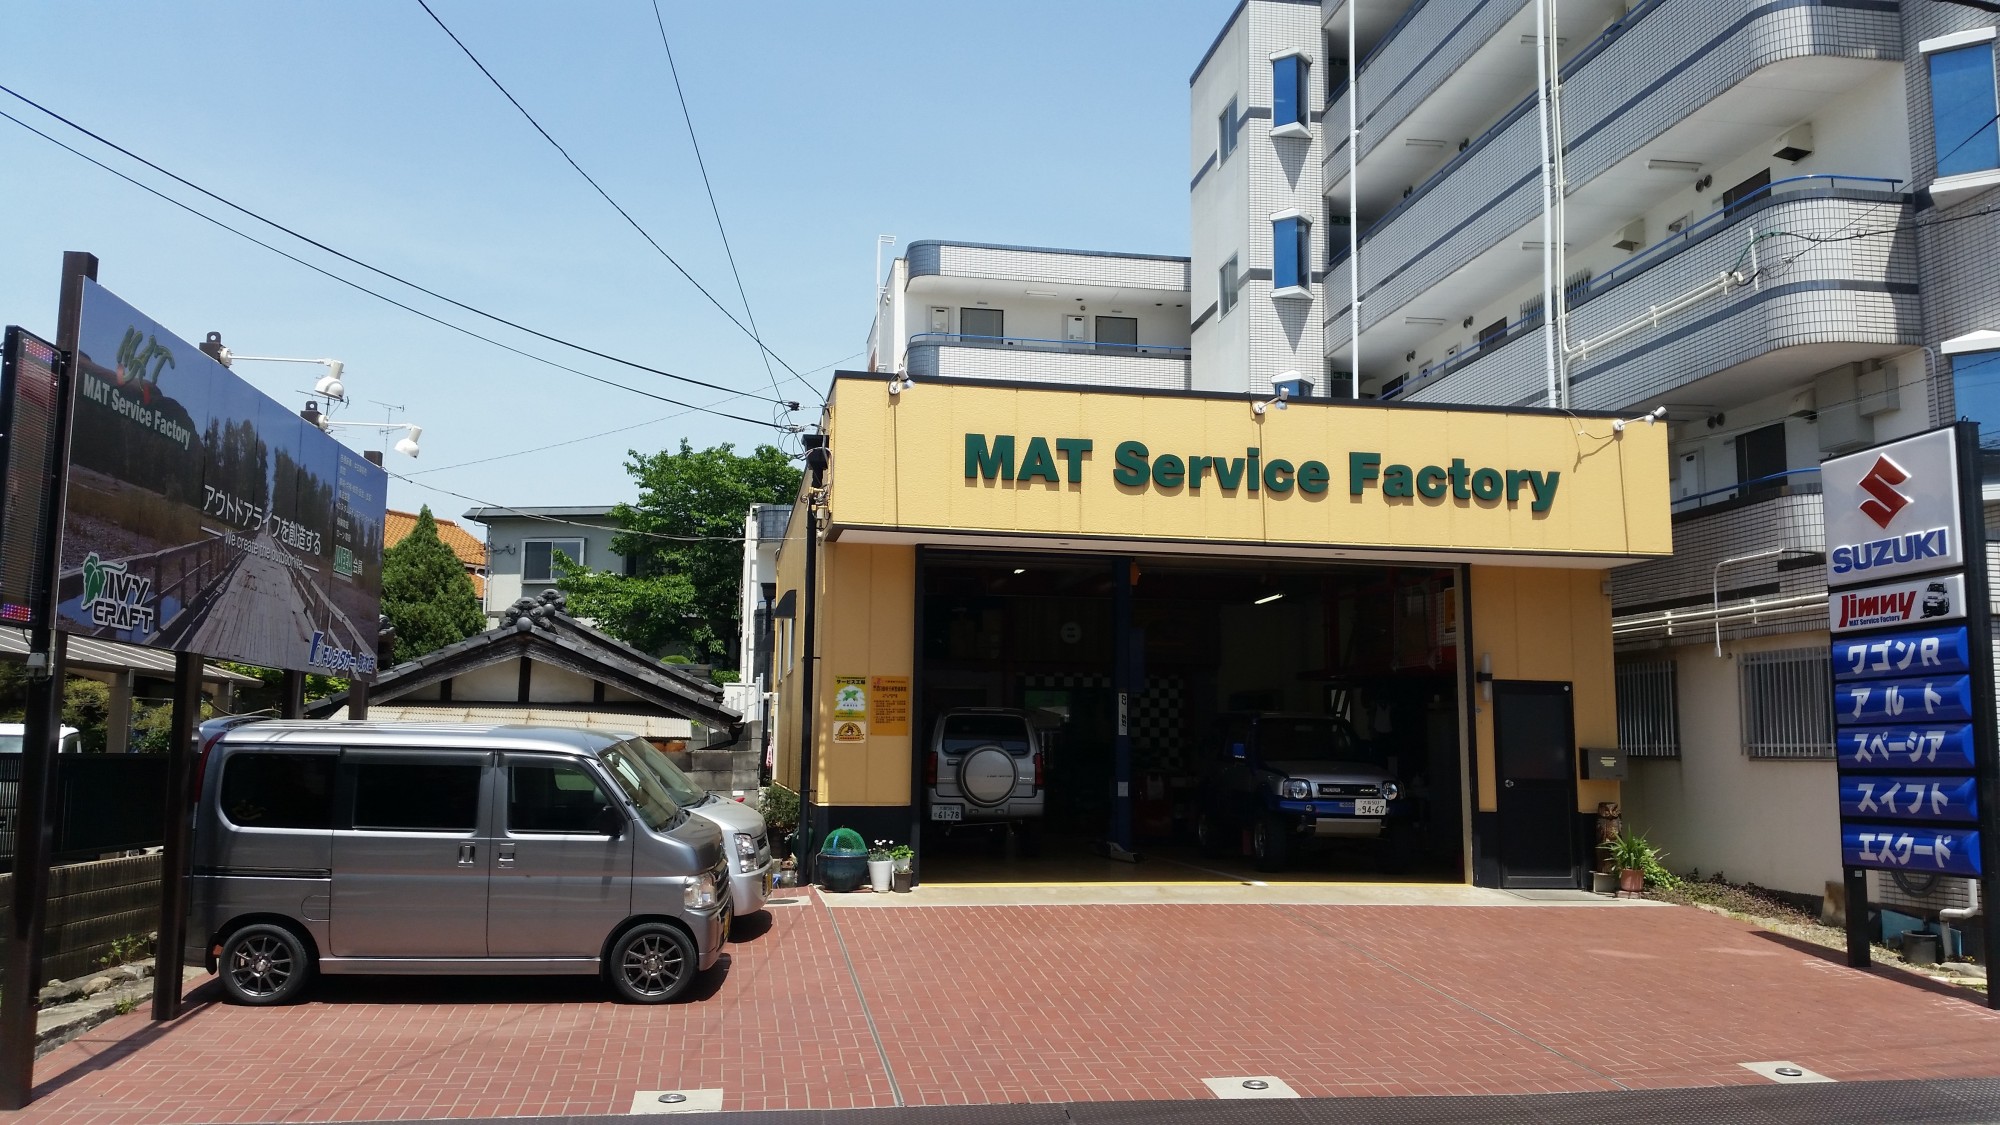 MAT Service Factory (マット サービス ファクトリー)